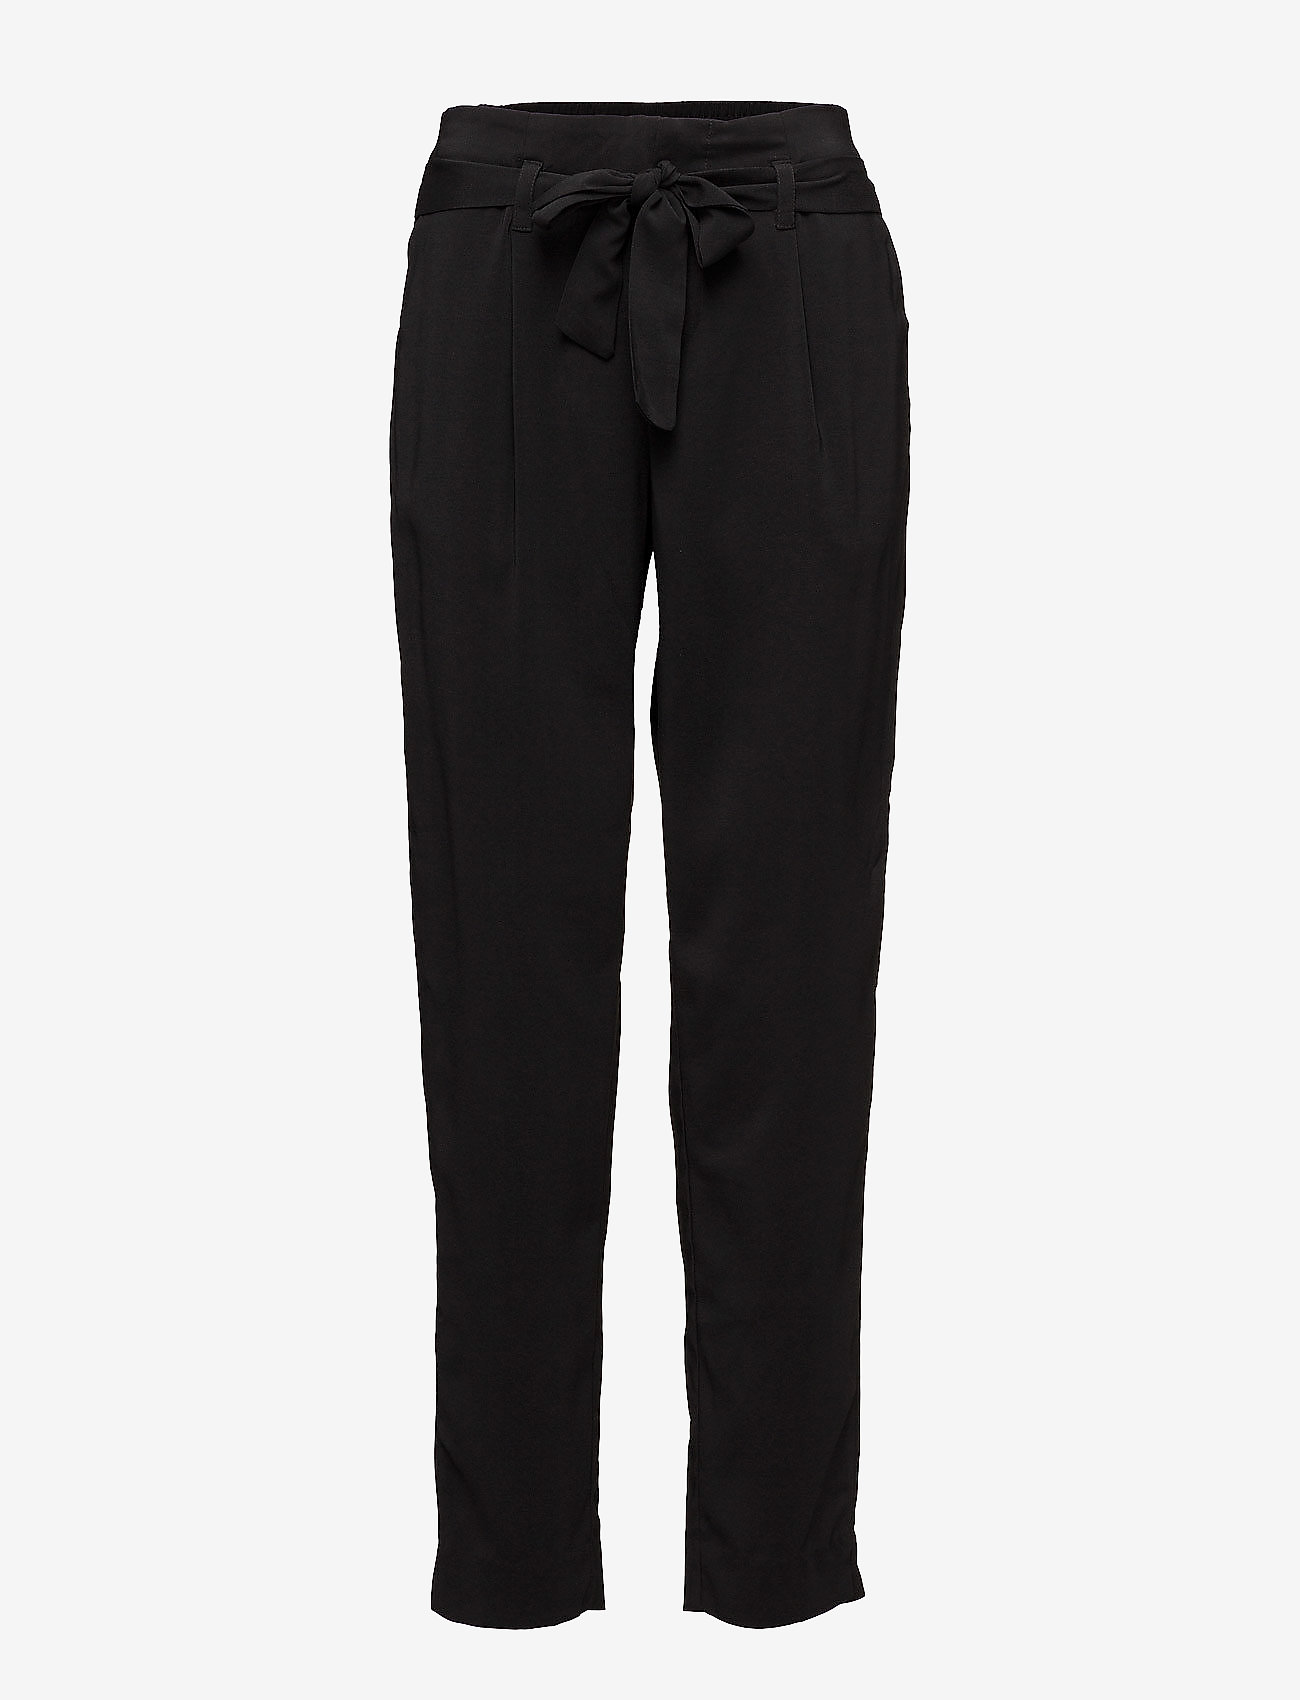 Saint Tropez - R5005, AndreaSZ Pants - straight leg trousers - black - 0